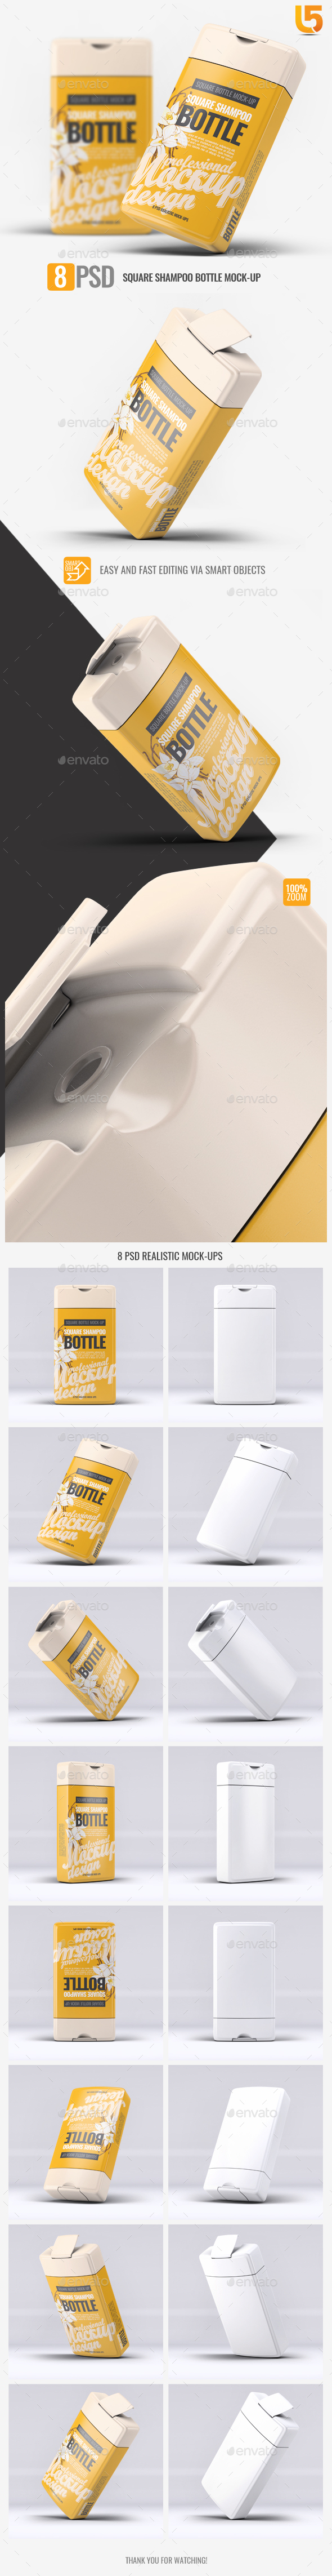 Download Square Shampoo Bottle Mock Up By L5design Graphicriver